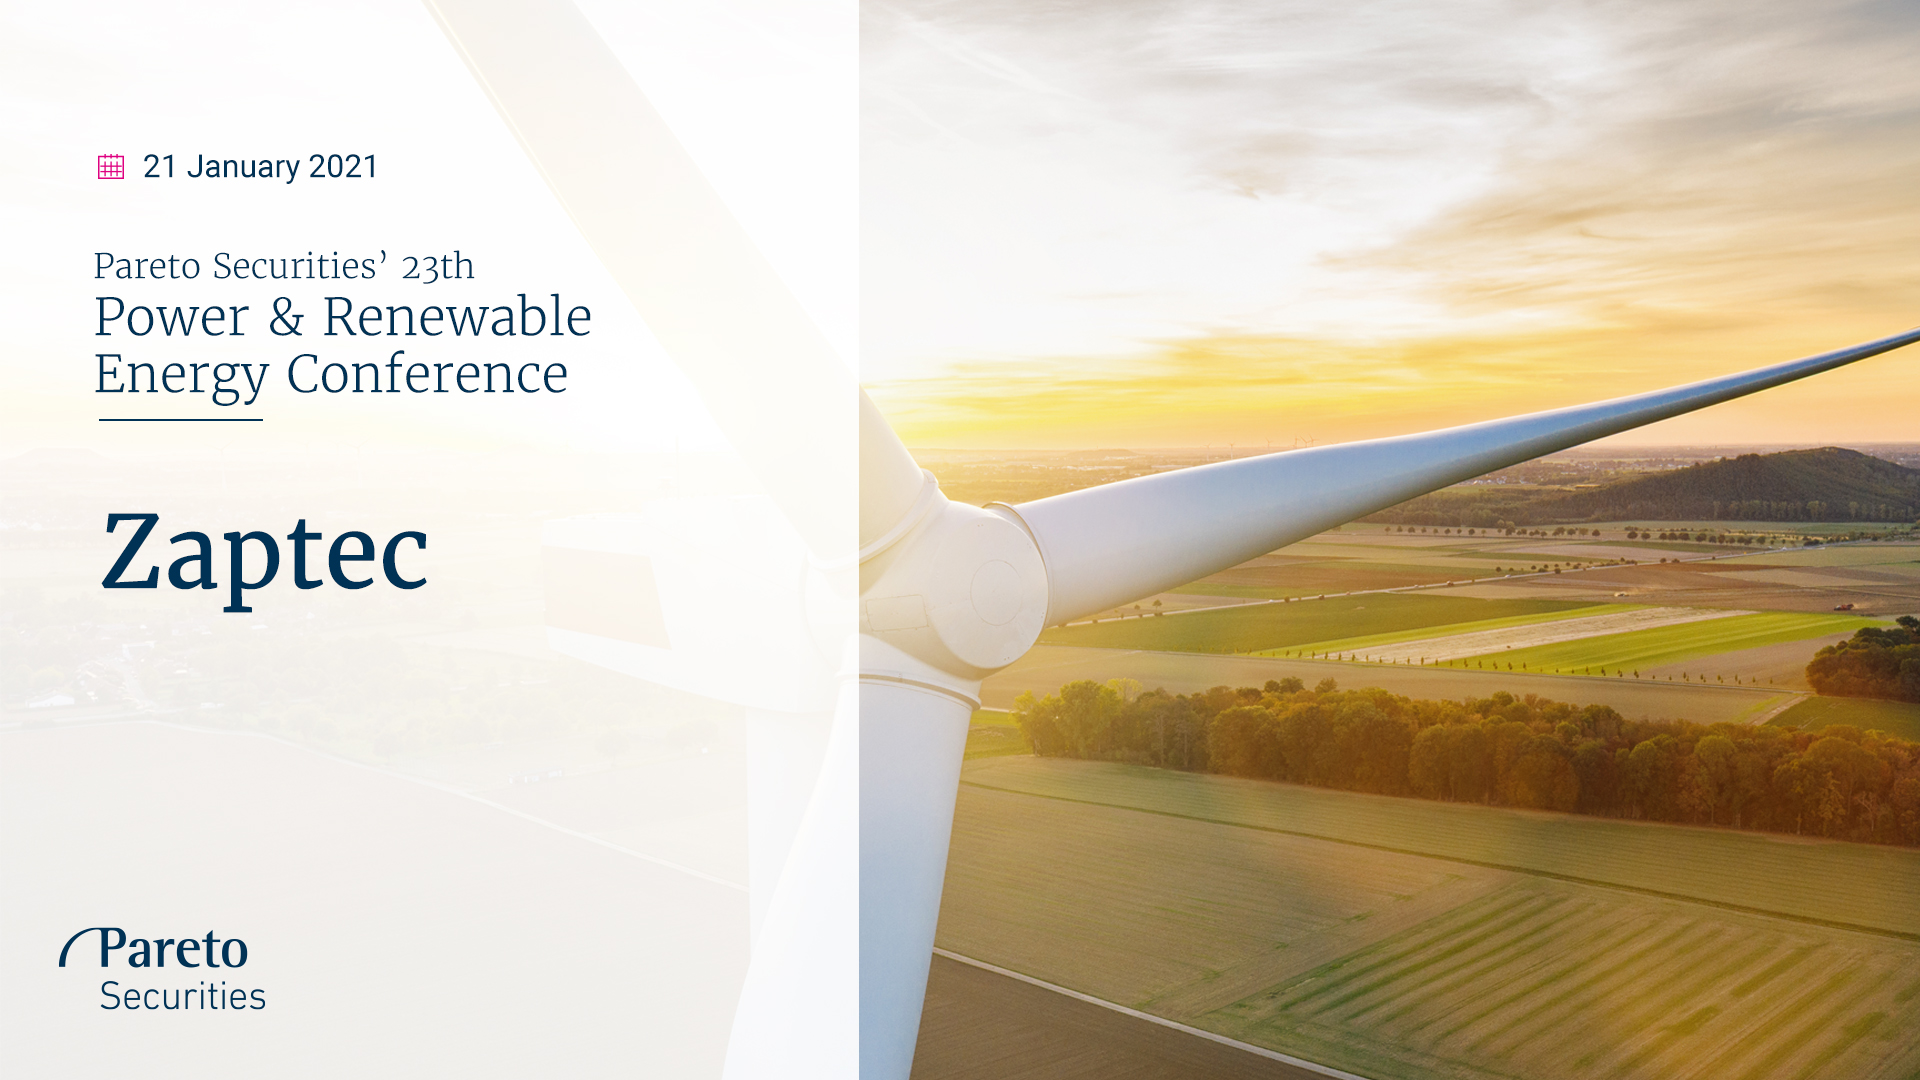 Zaptec / Pareto Securities’ Power & Renewable Energy Conference